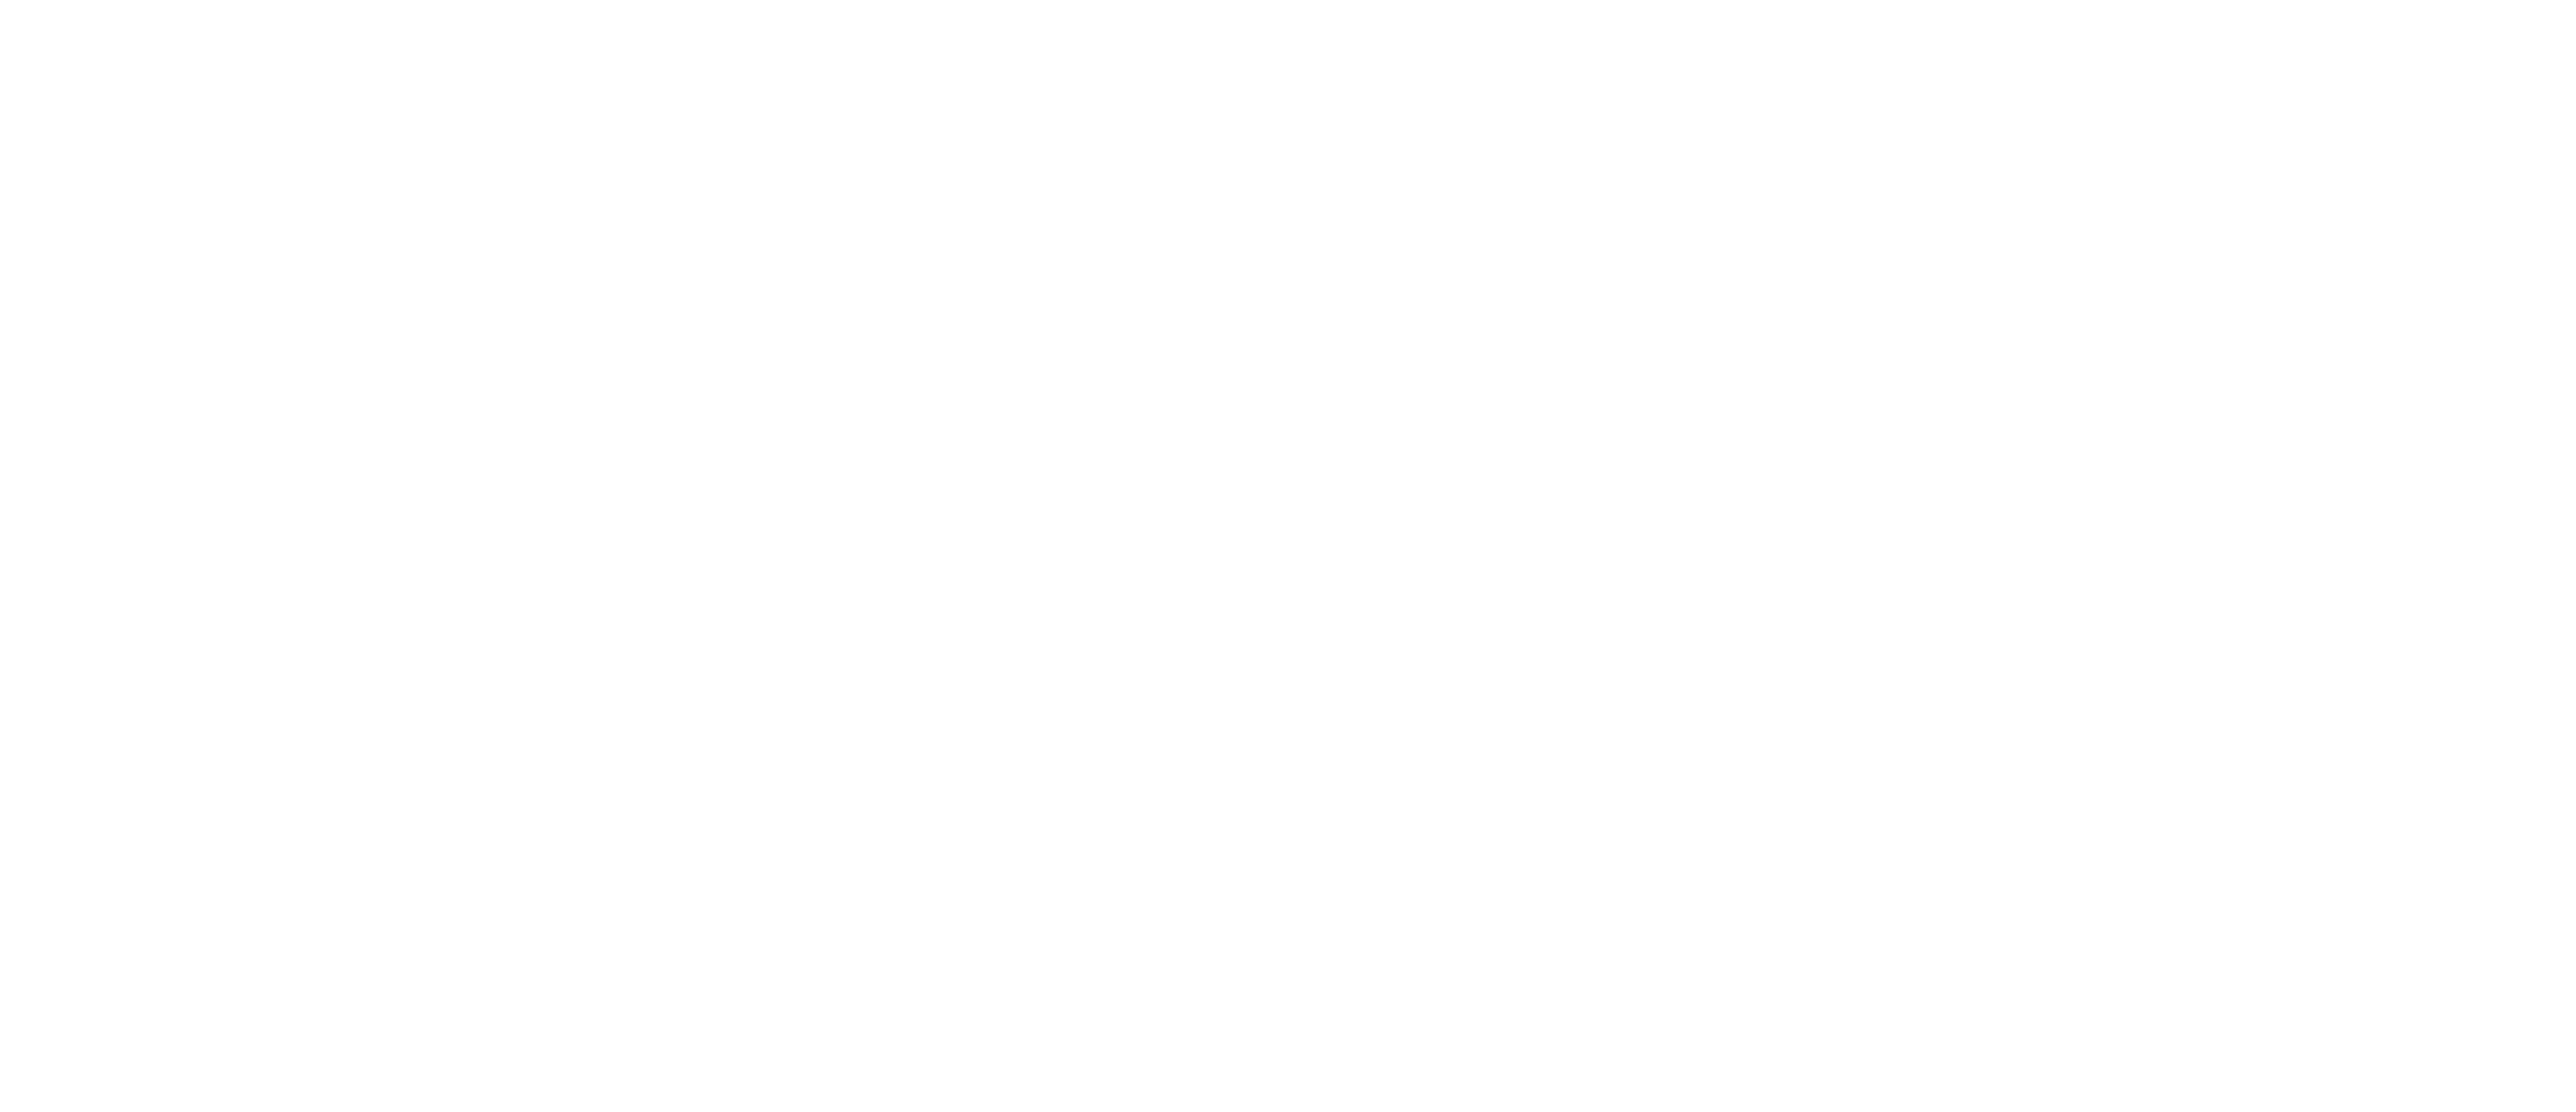 Shipwreck Hunters Australia logo